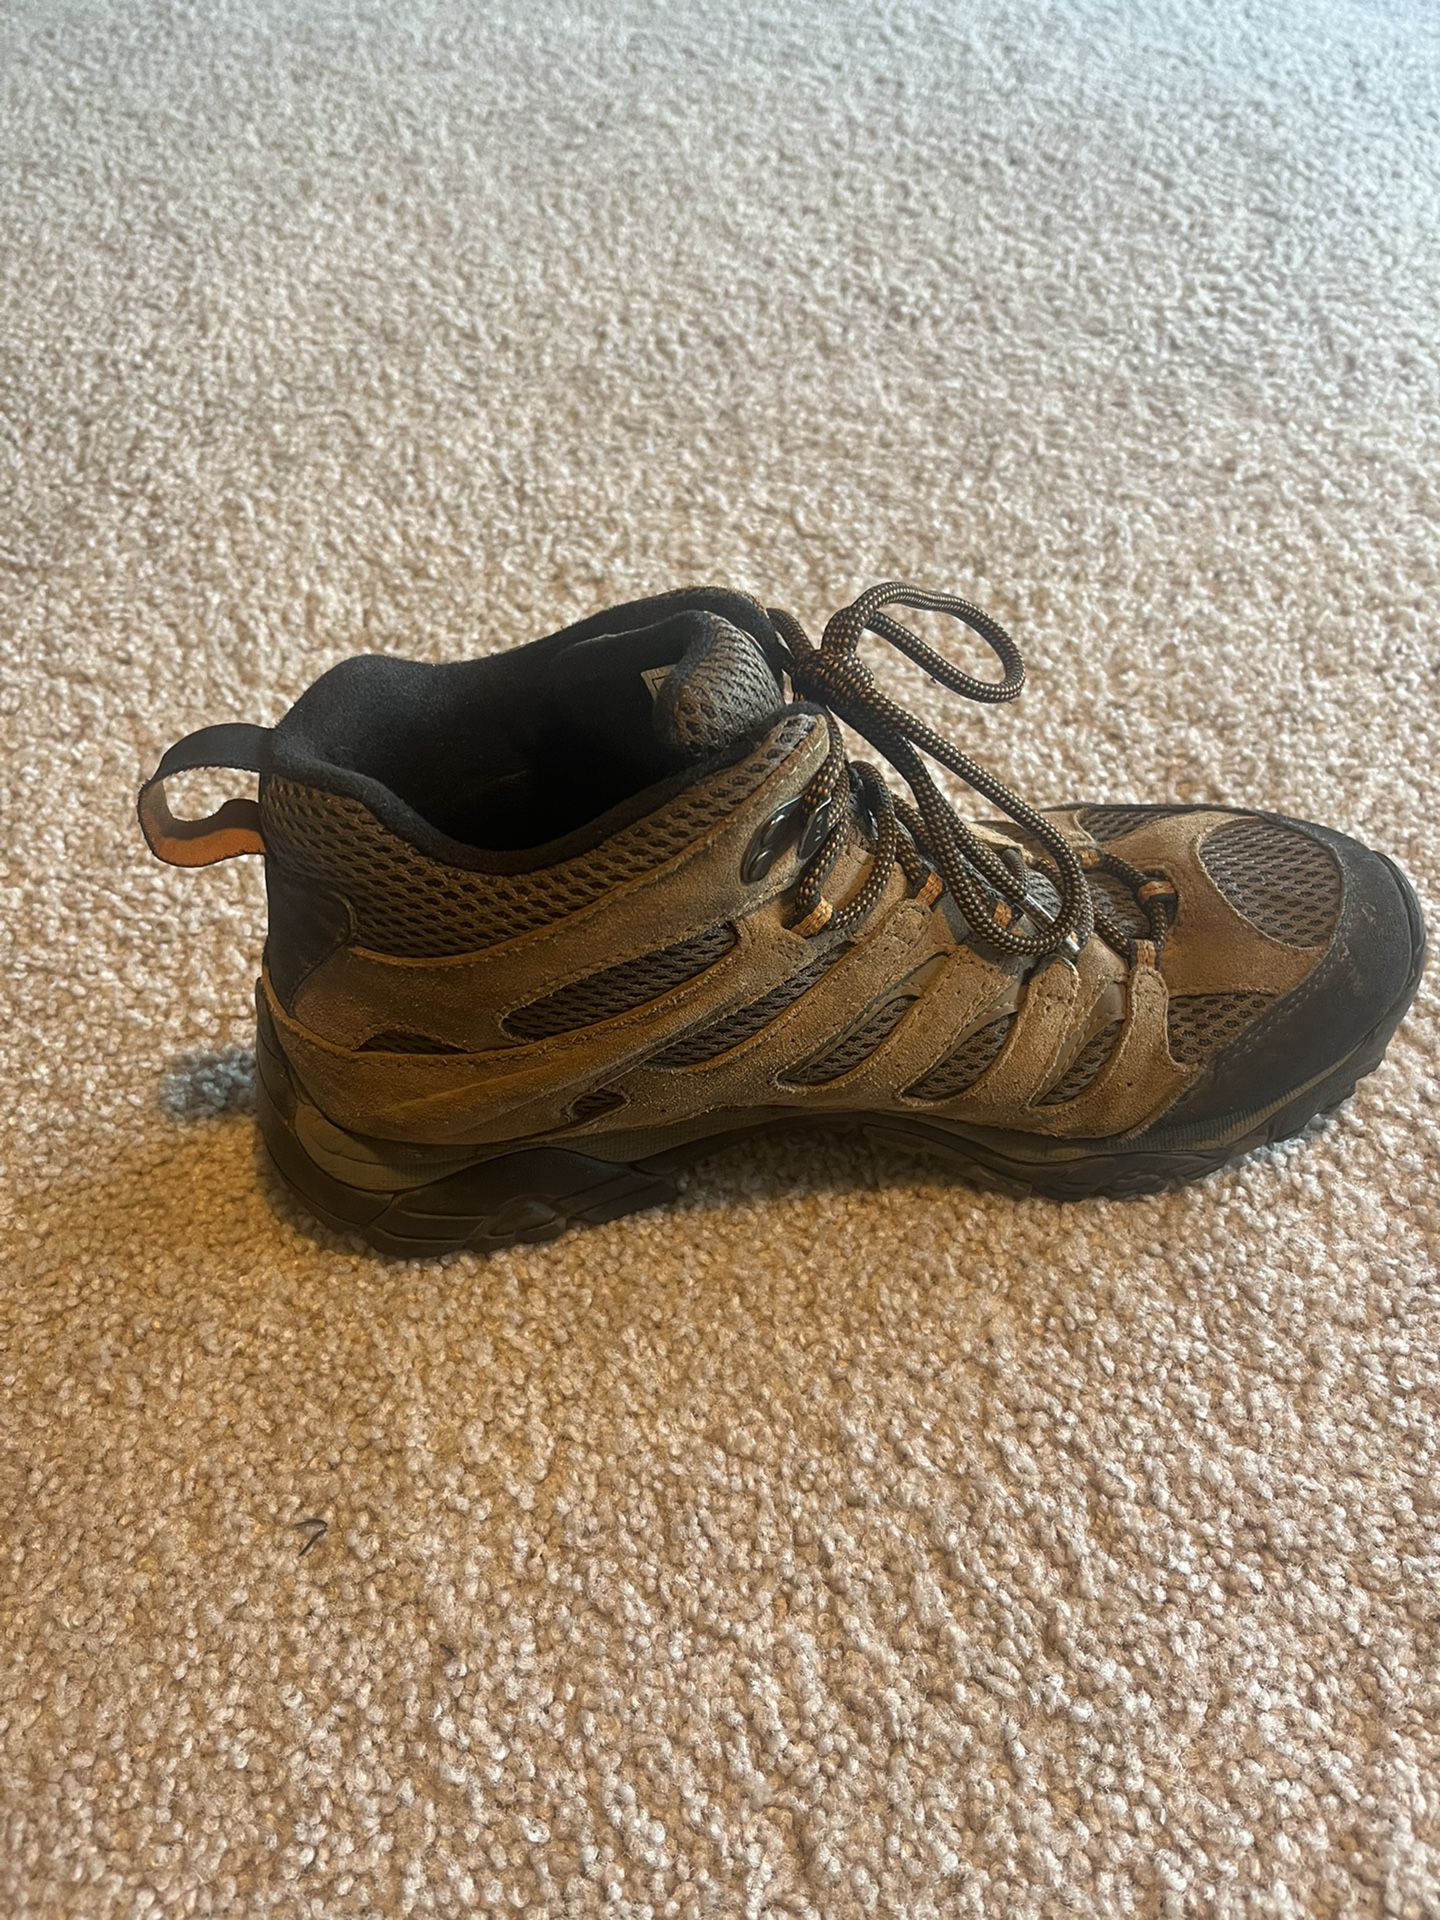 Merrell Moab Waterproof Hiking Boots 9.5